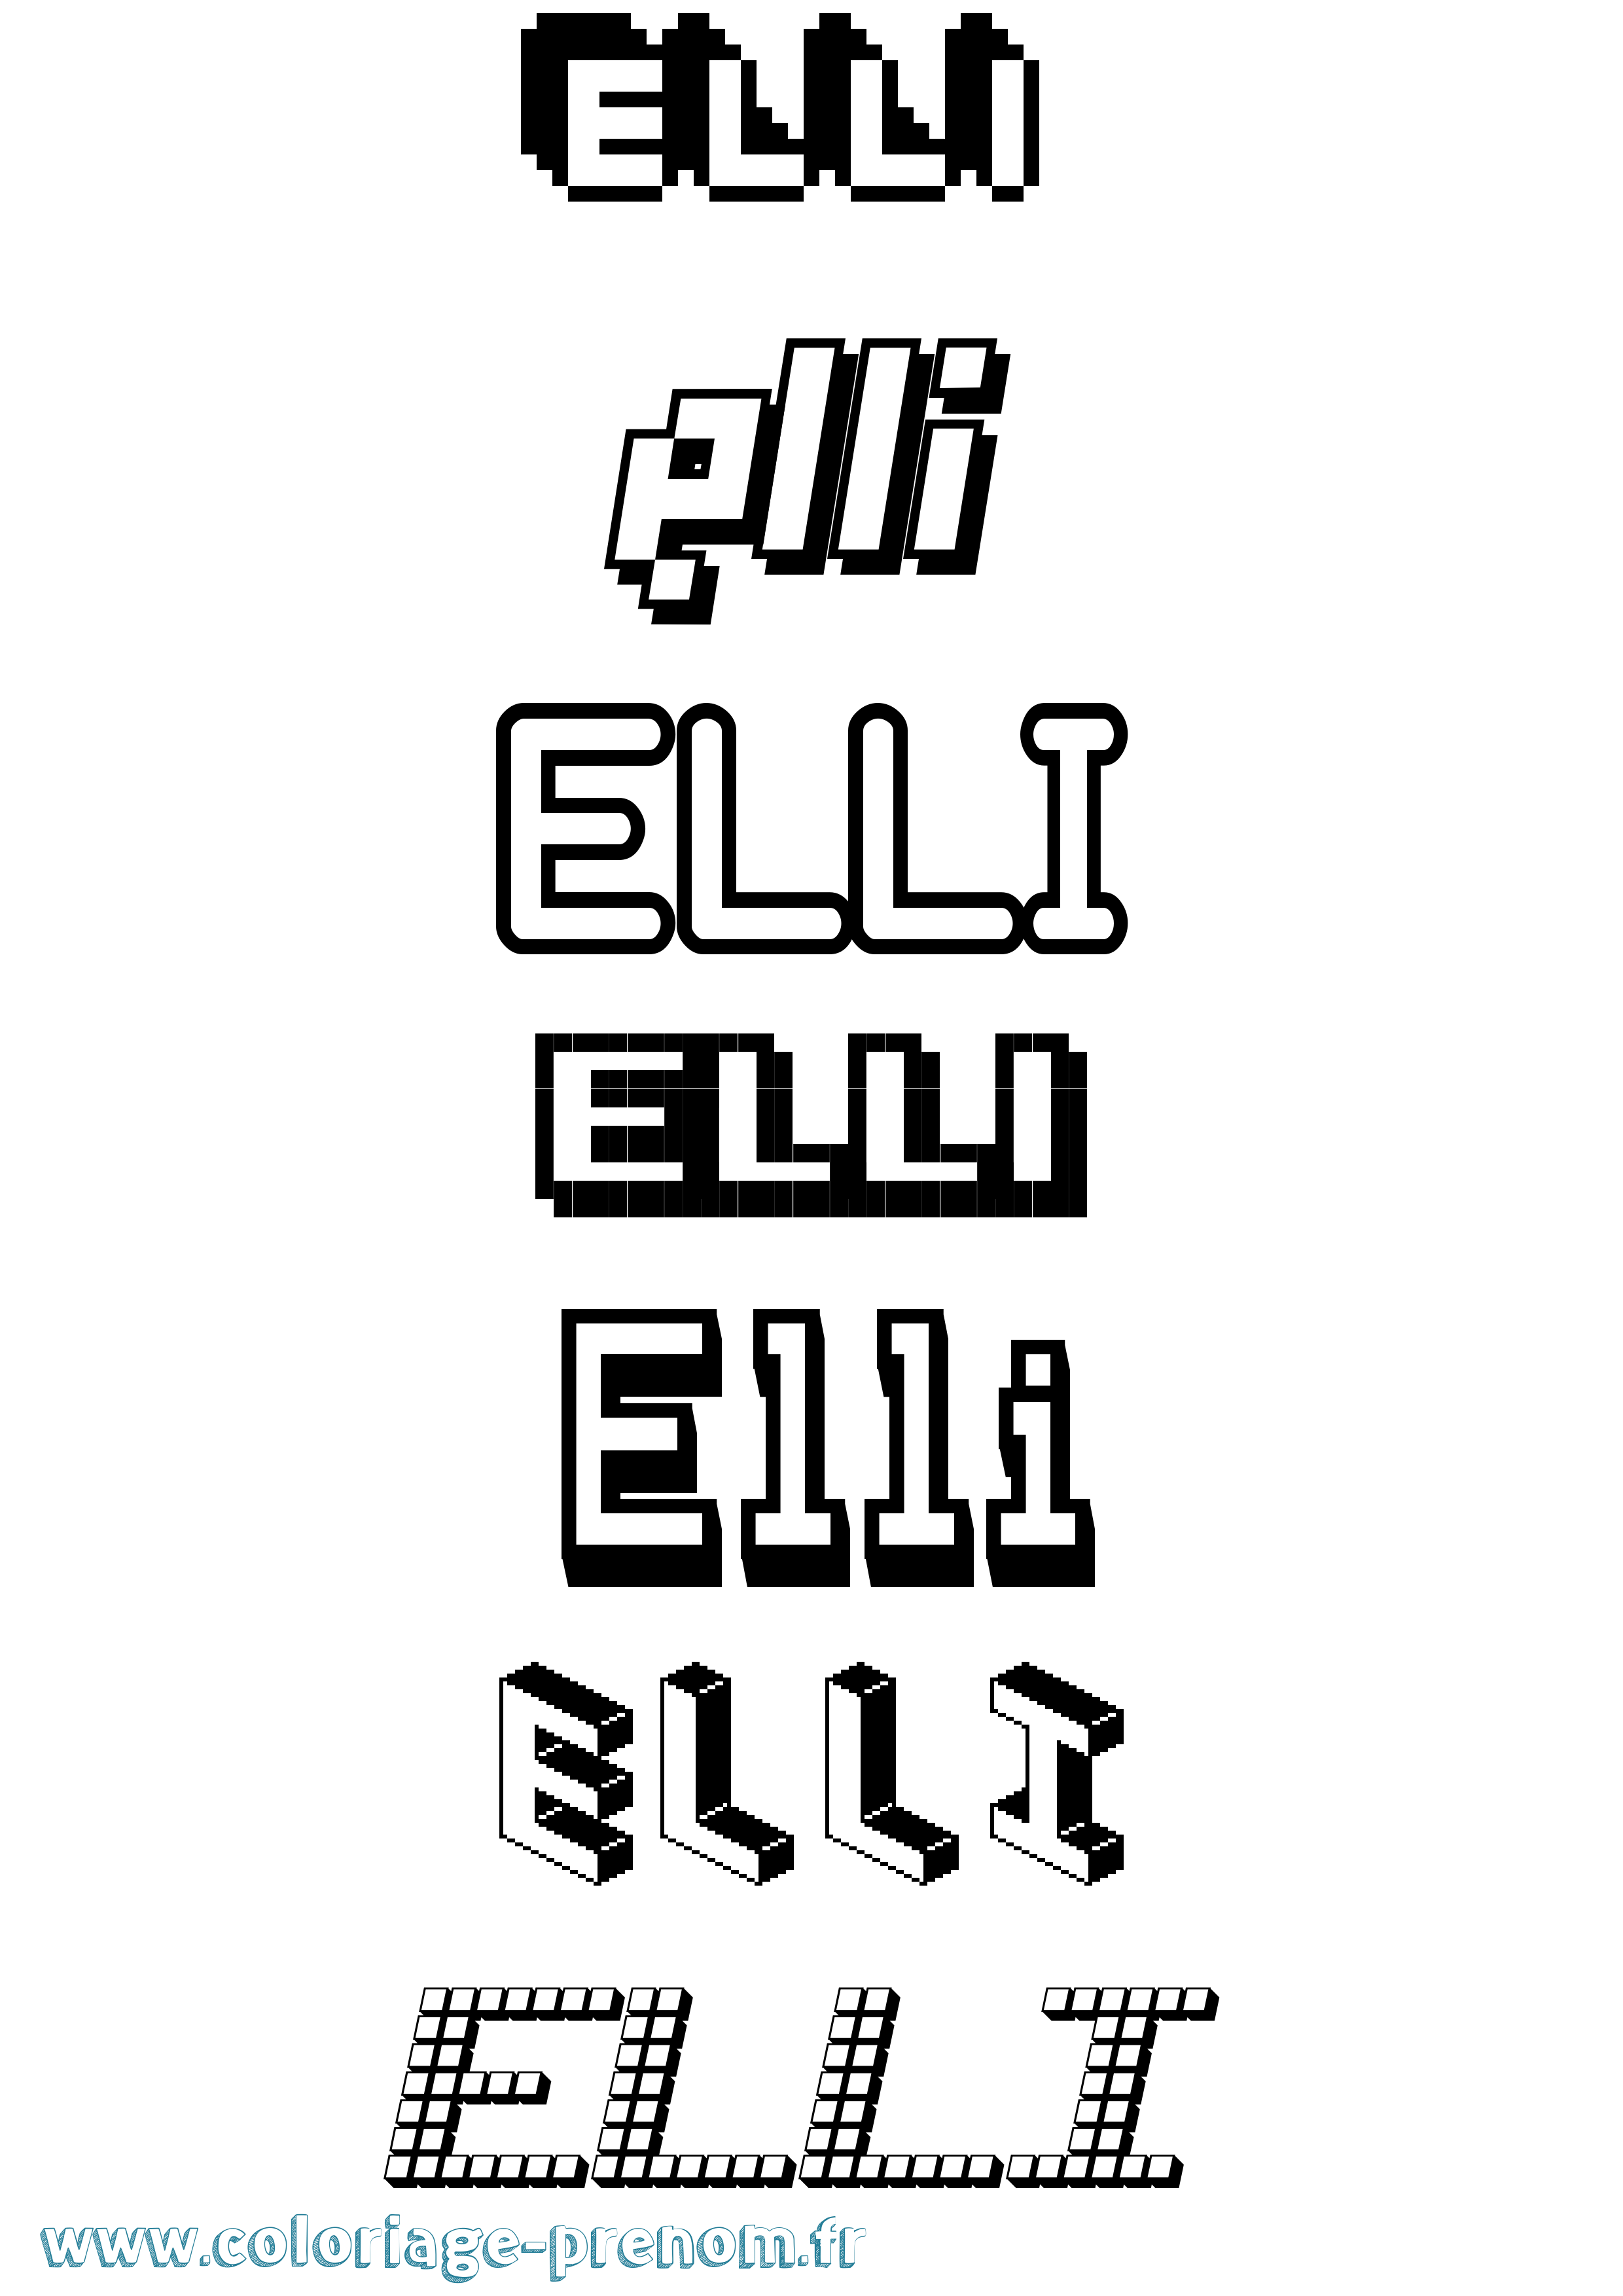 Coloriage prénom Elli Pixel